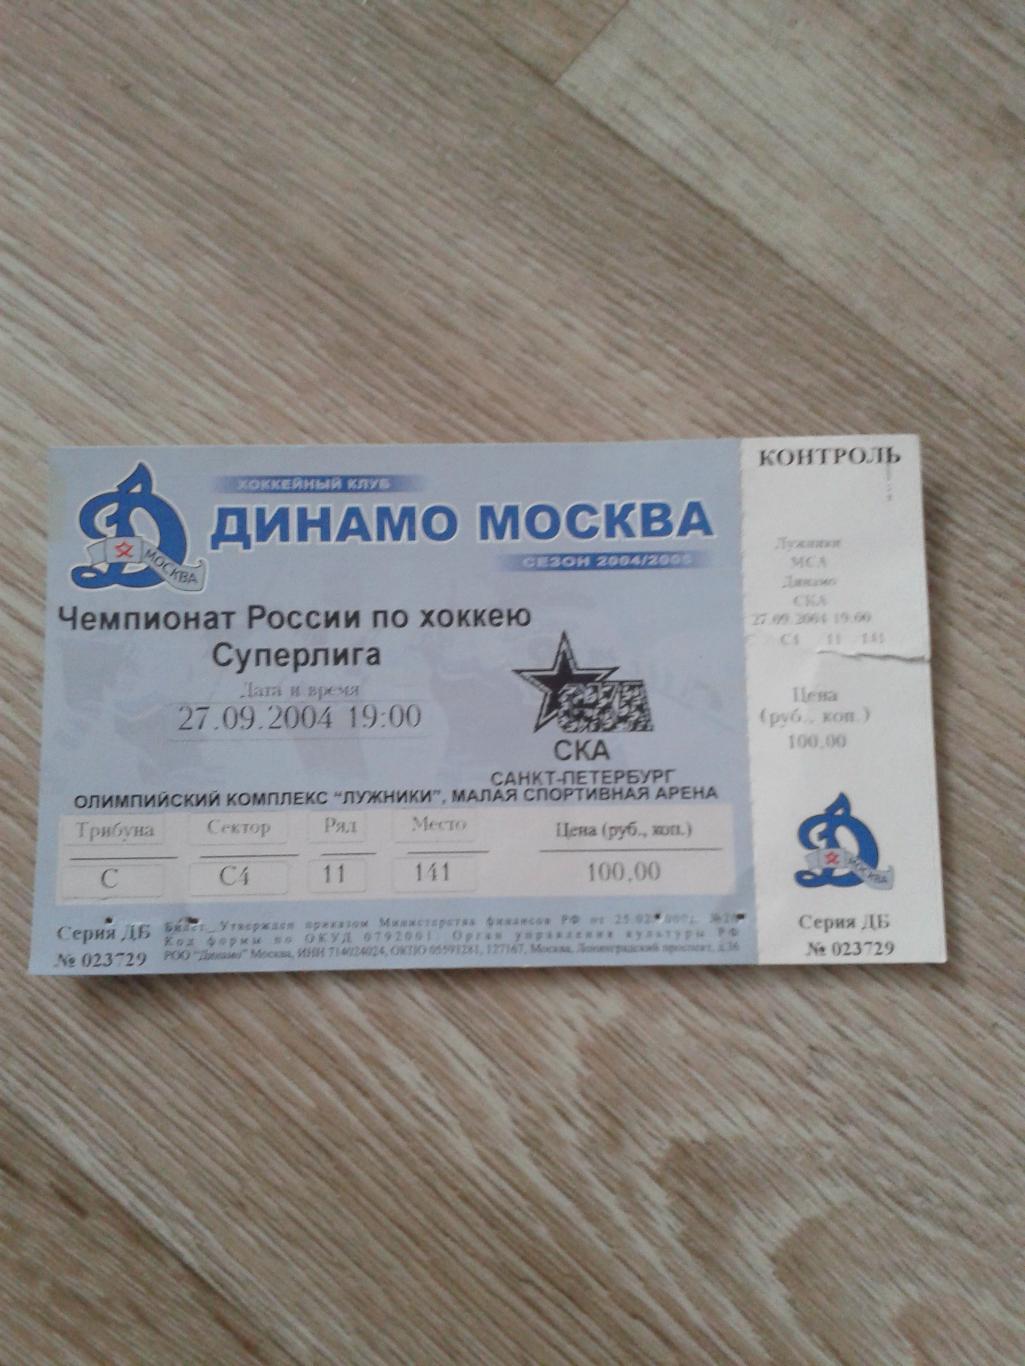 27.9.2004 Динамо Москва-СКА Санкт-Петербург билет